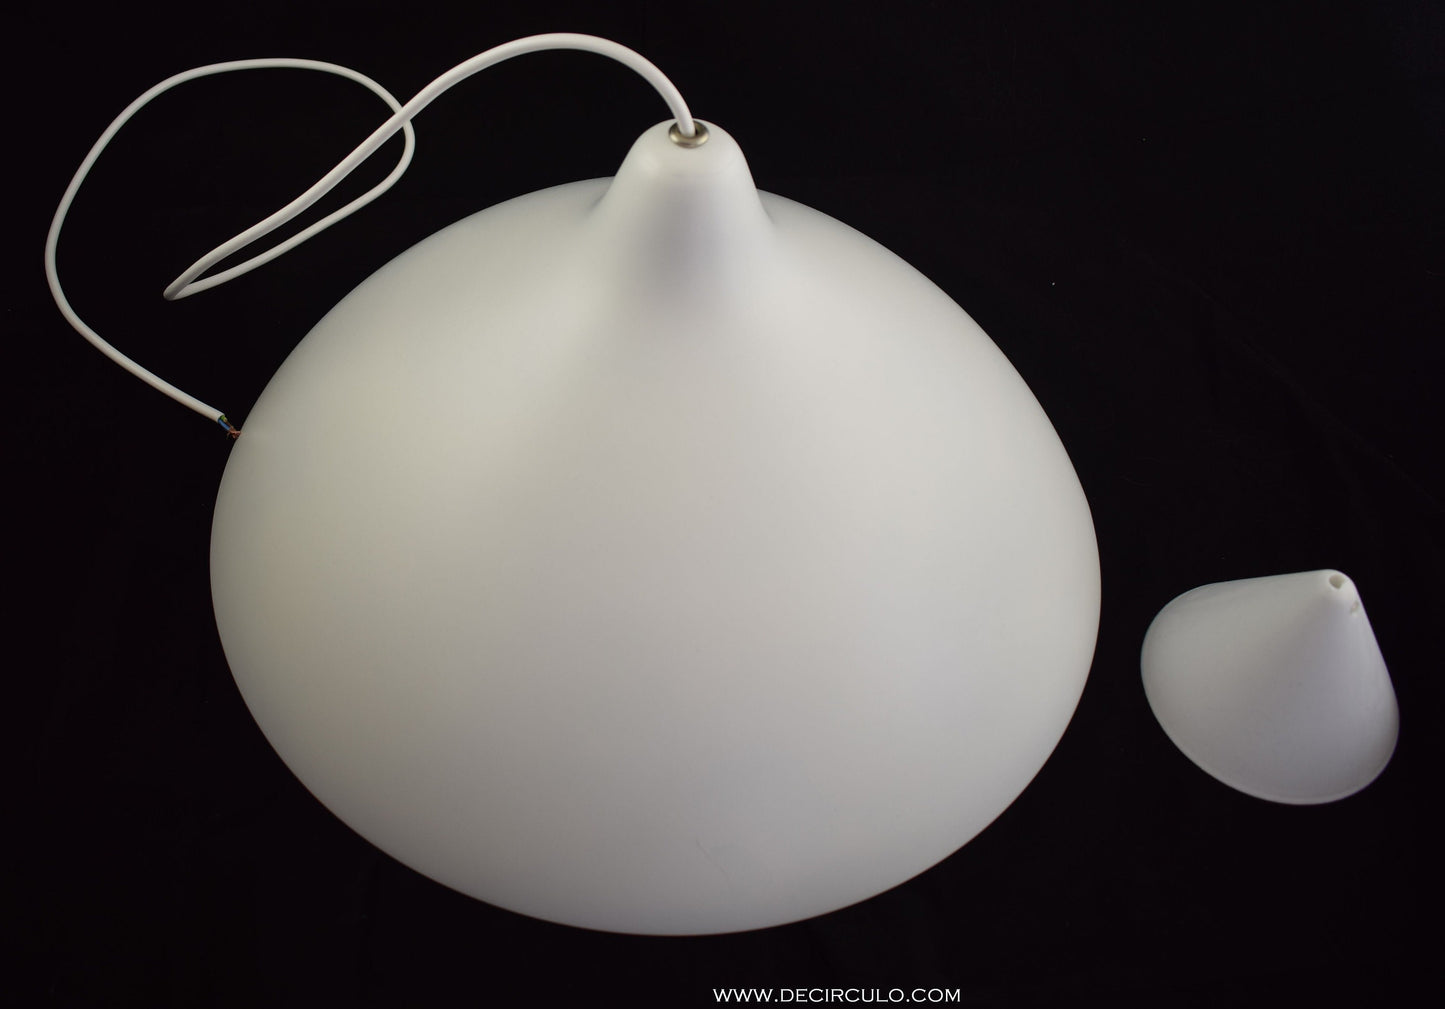 Stockmann Orno design Lisa Johansson-Pape white pendant lamp made in Finland